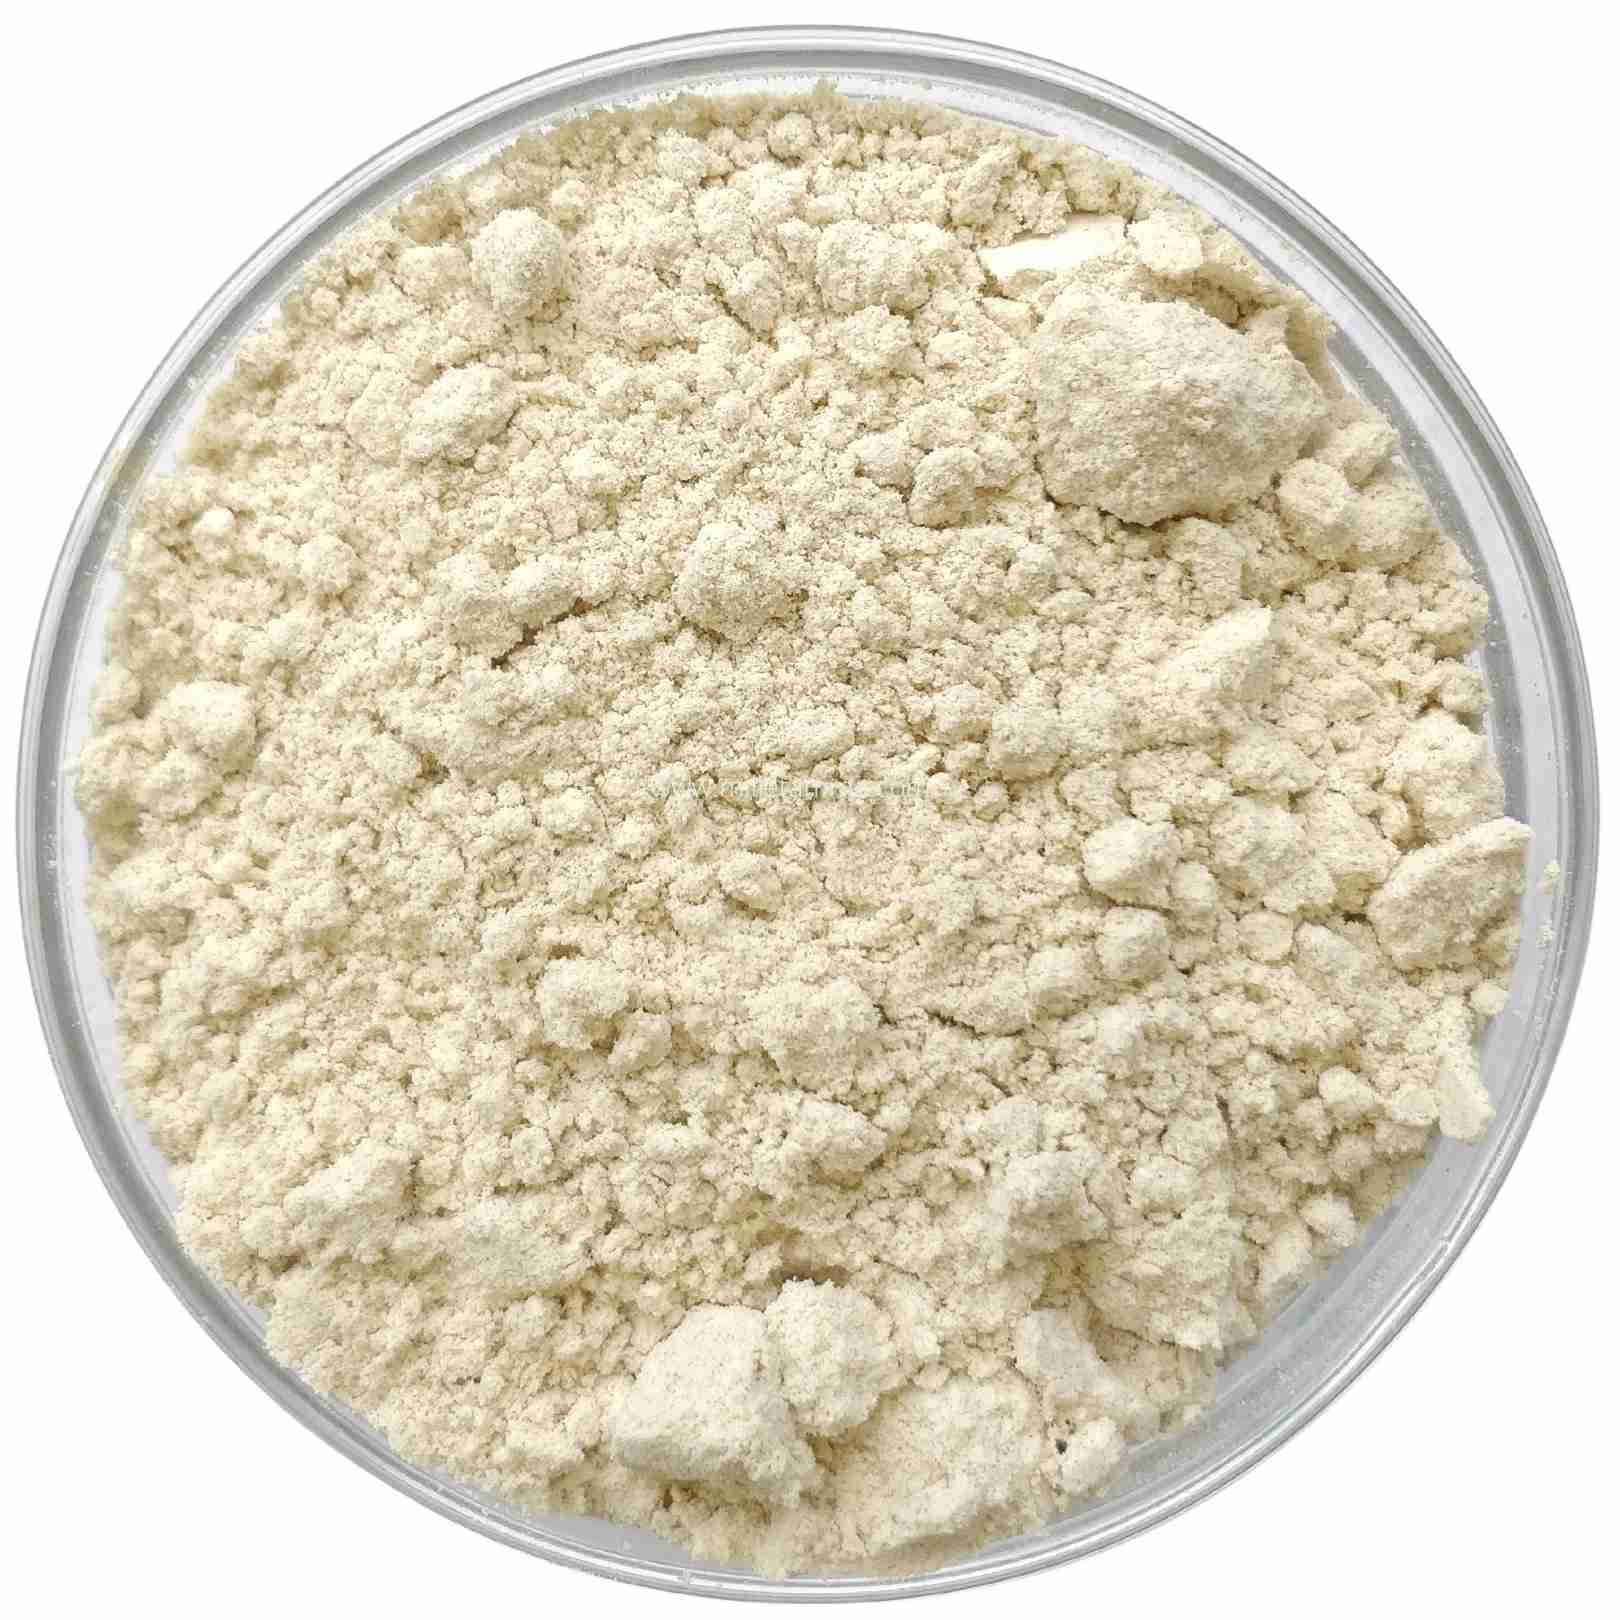 Gluten Free Premium Mix Flour Organic 1kg